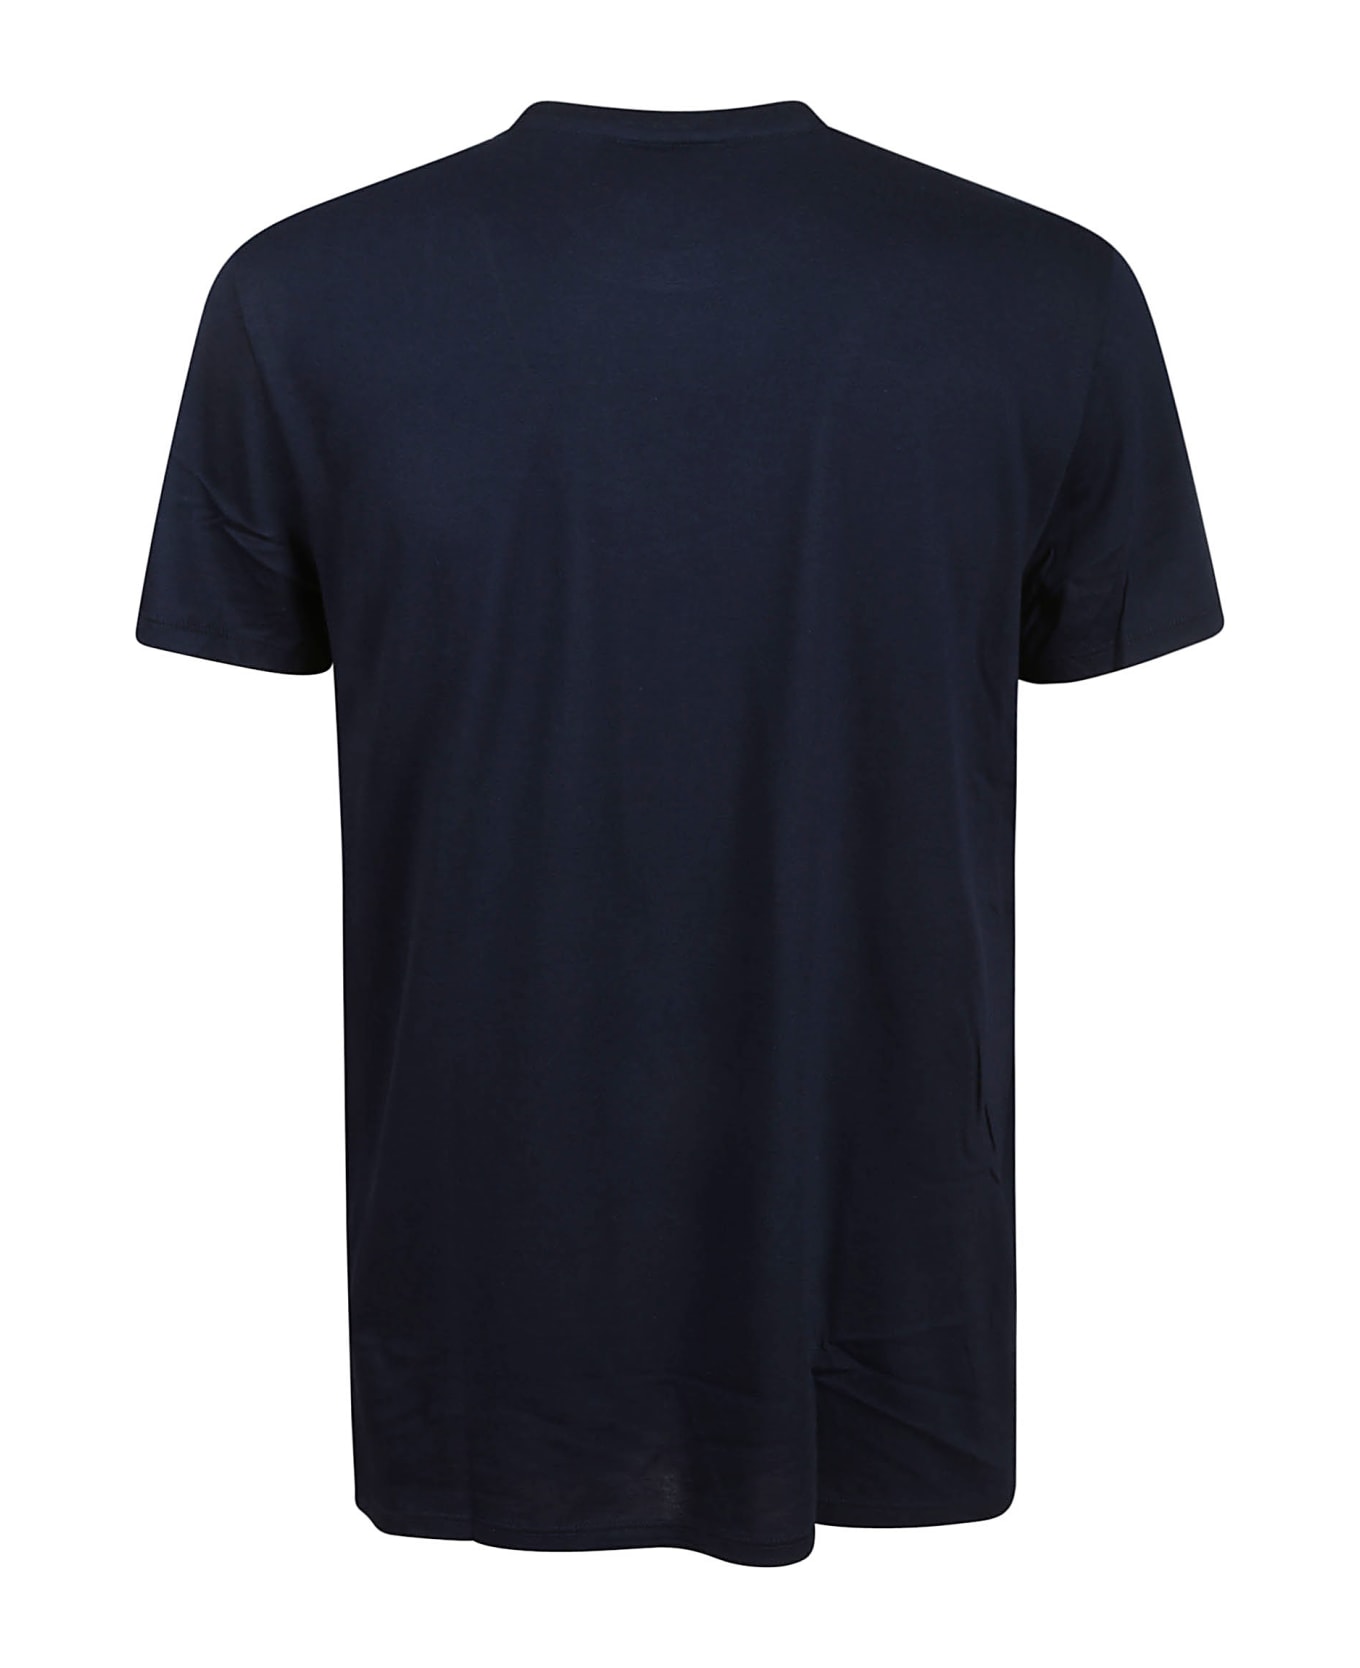 Lacoste Tshirt - Navy Blue